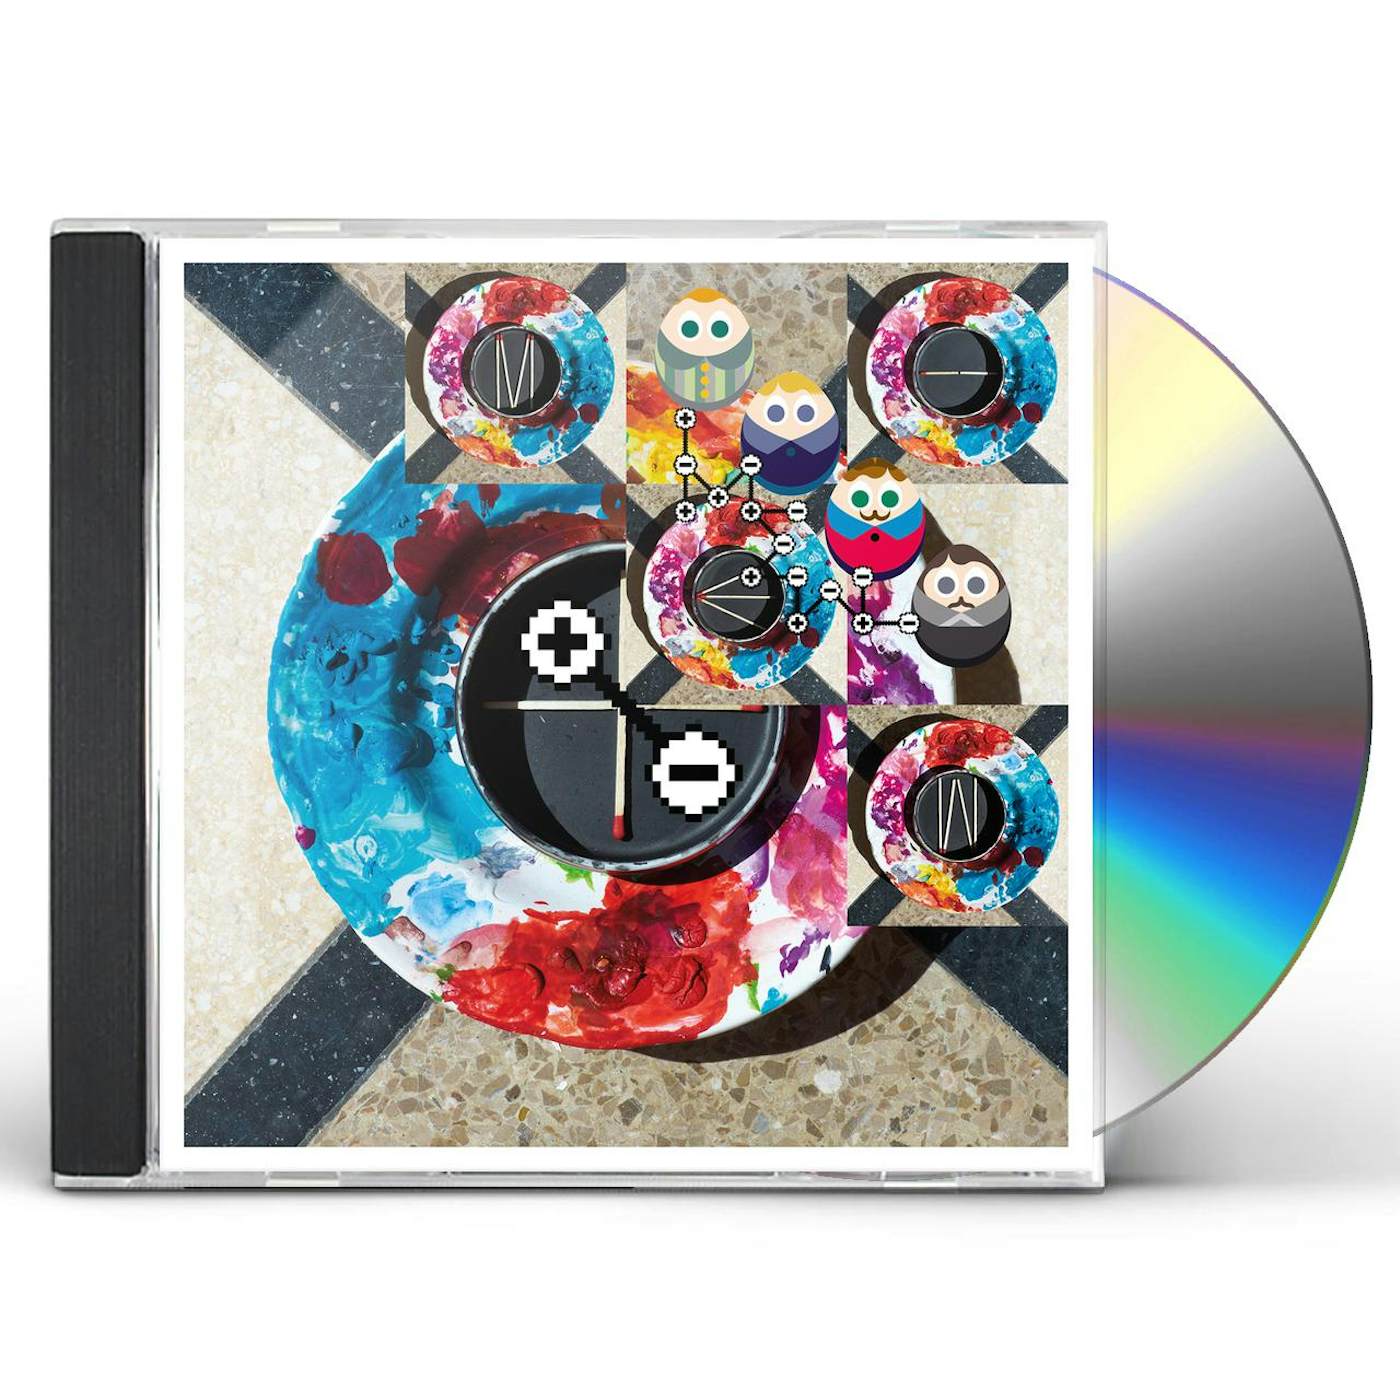 Mew + - CD